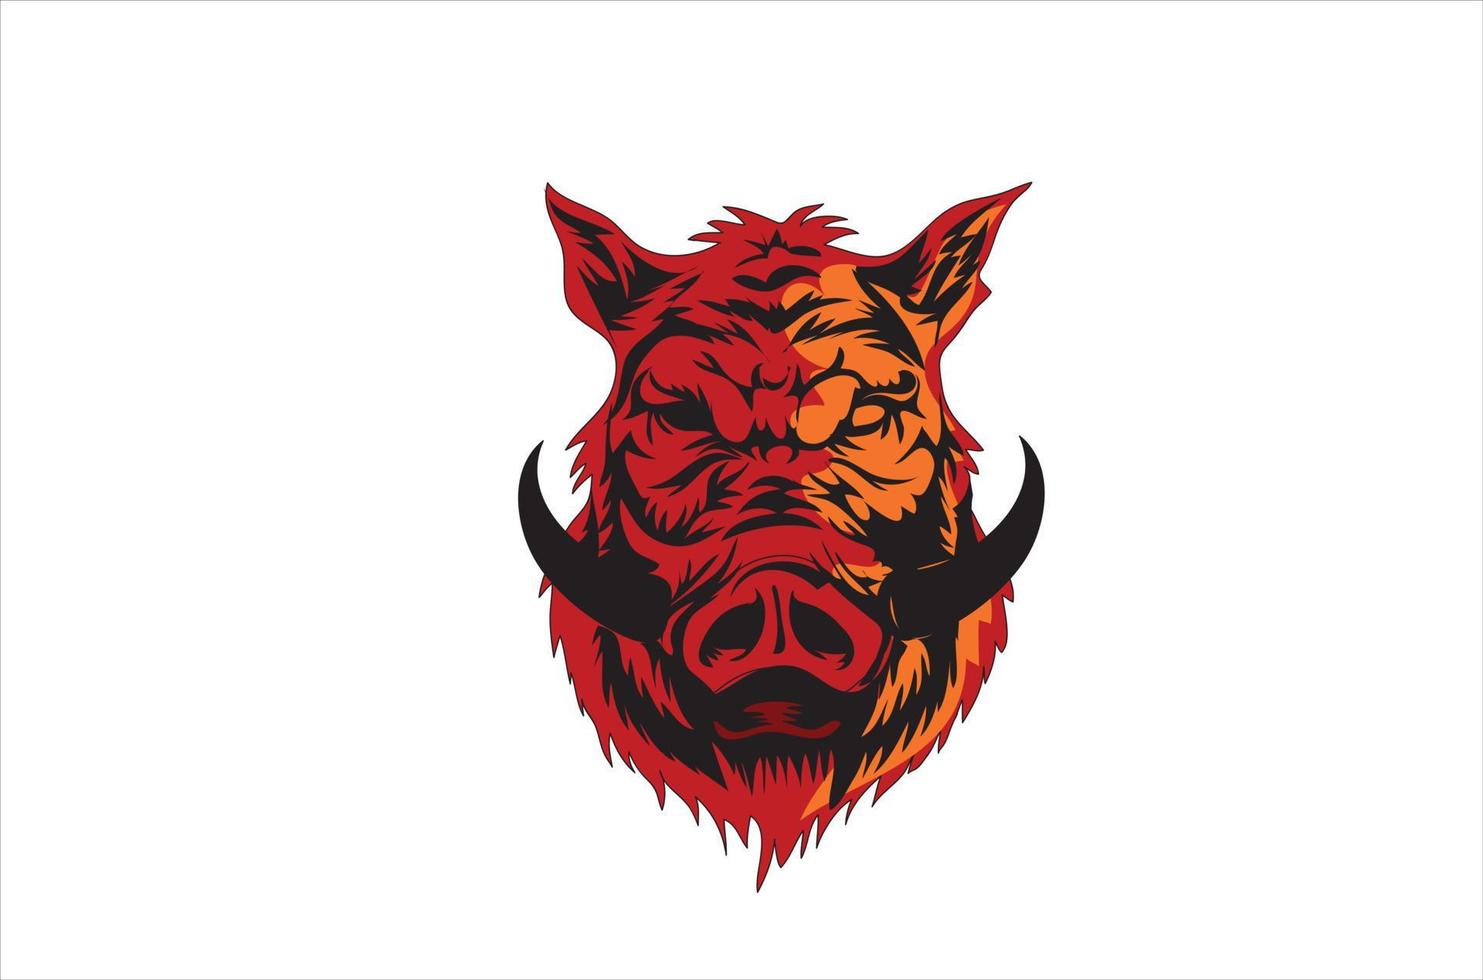 Pig mascot logo, vector for t -shirt